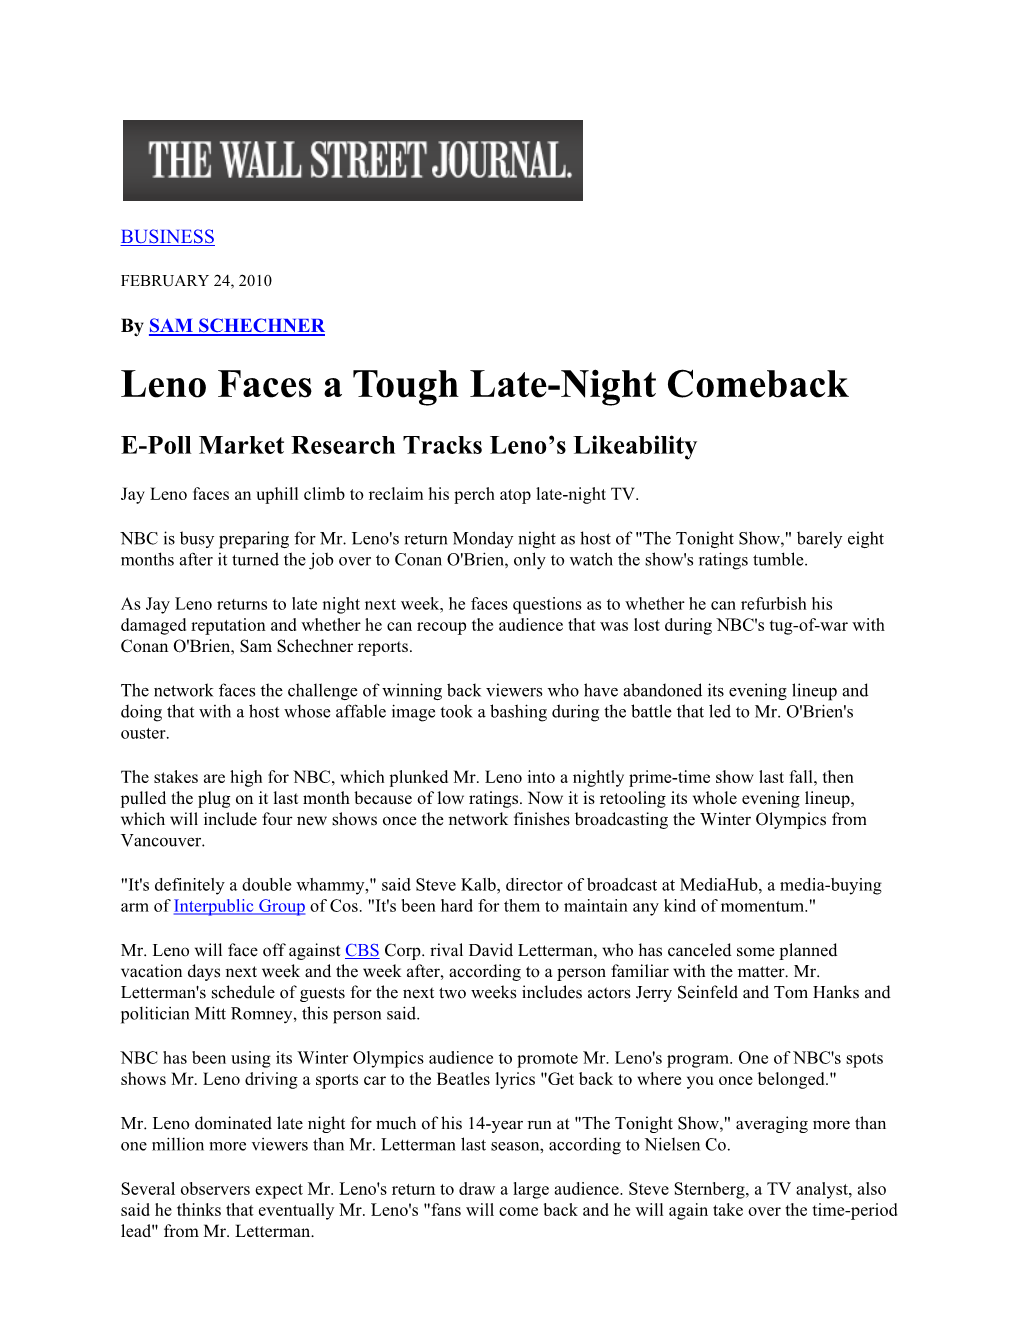 Leno Faces a Tough Late-Night Comeback